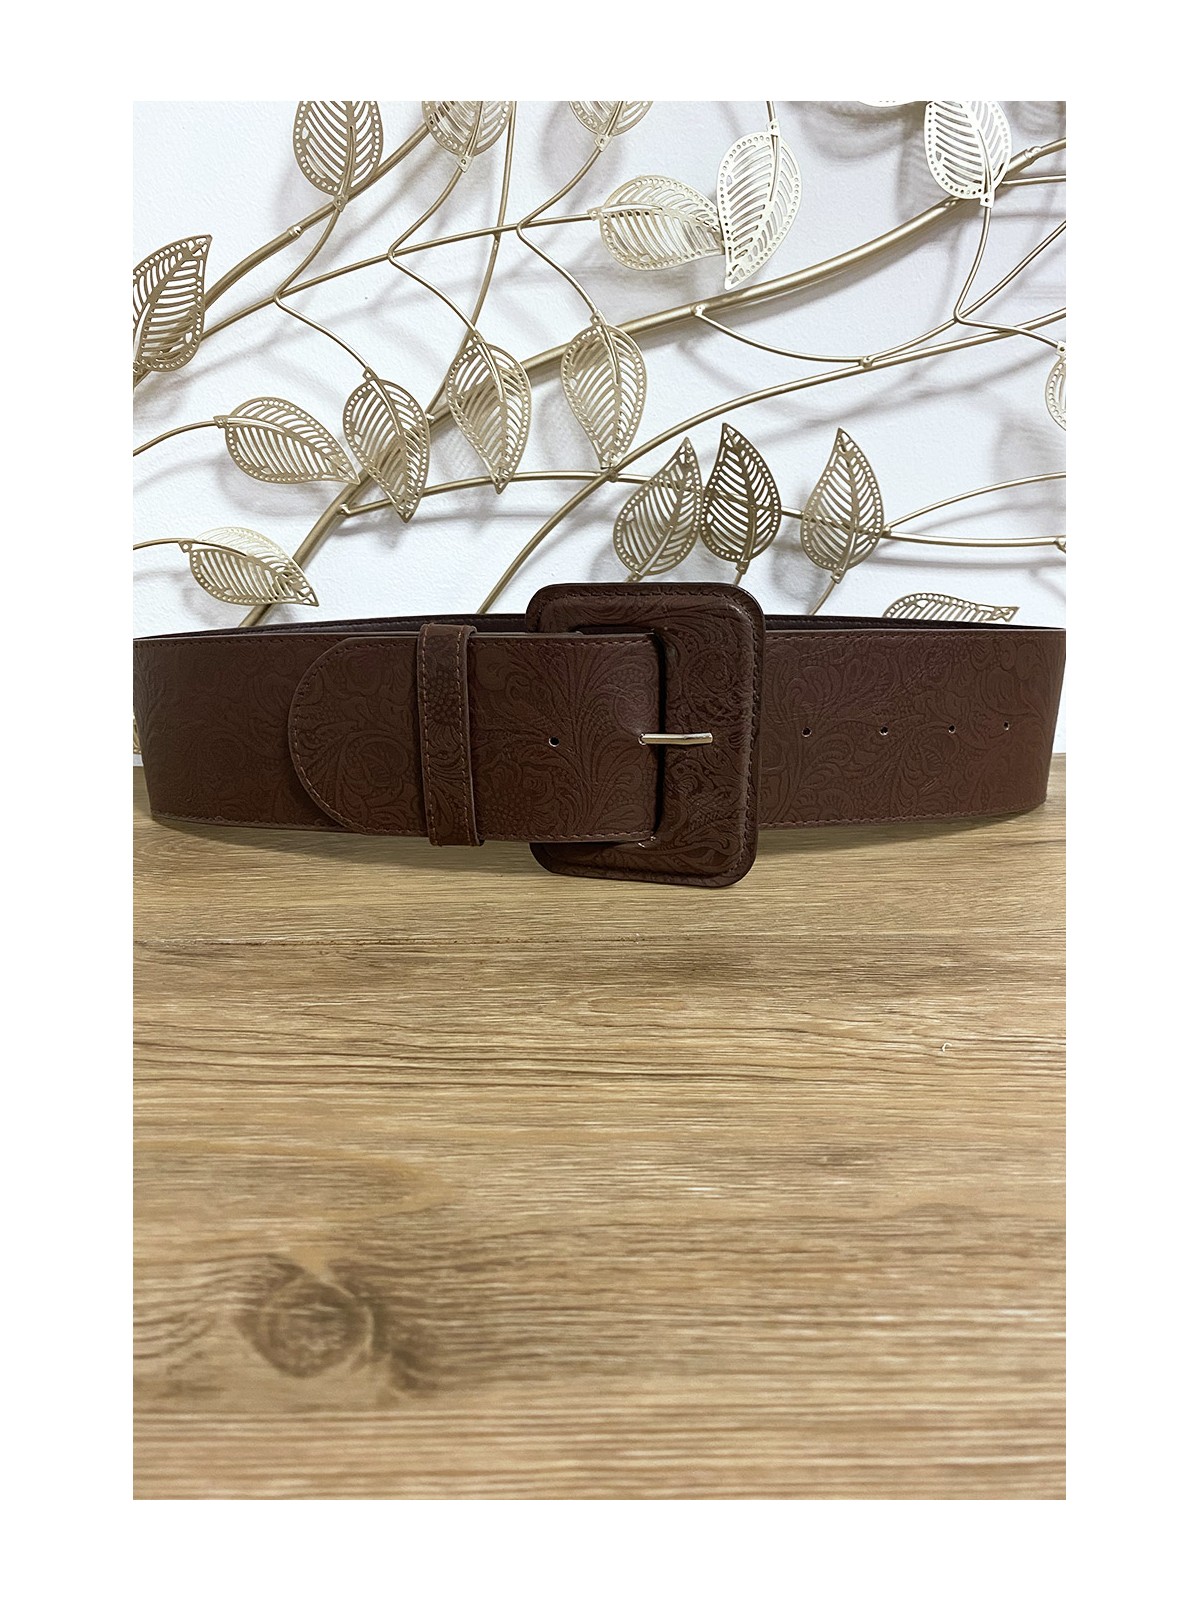 Grosse ceinture marron avec joli motif - 3